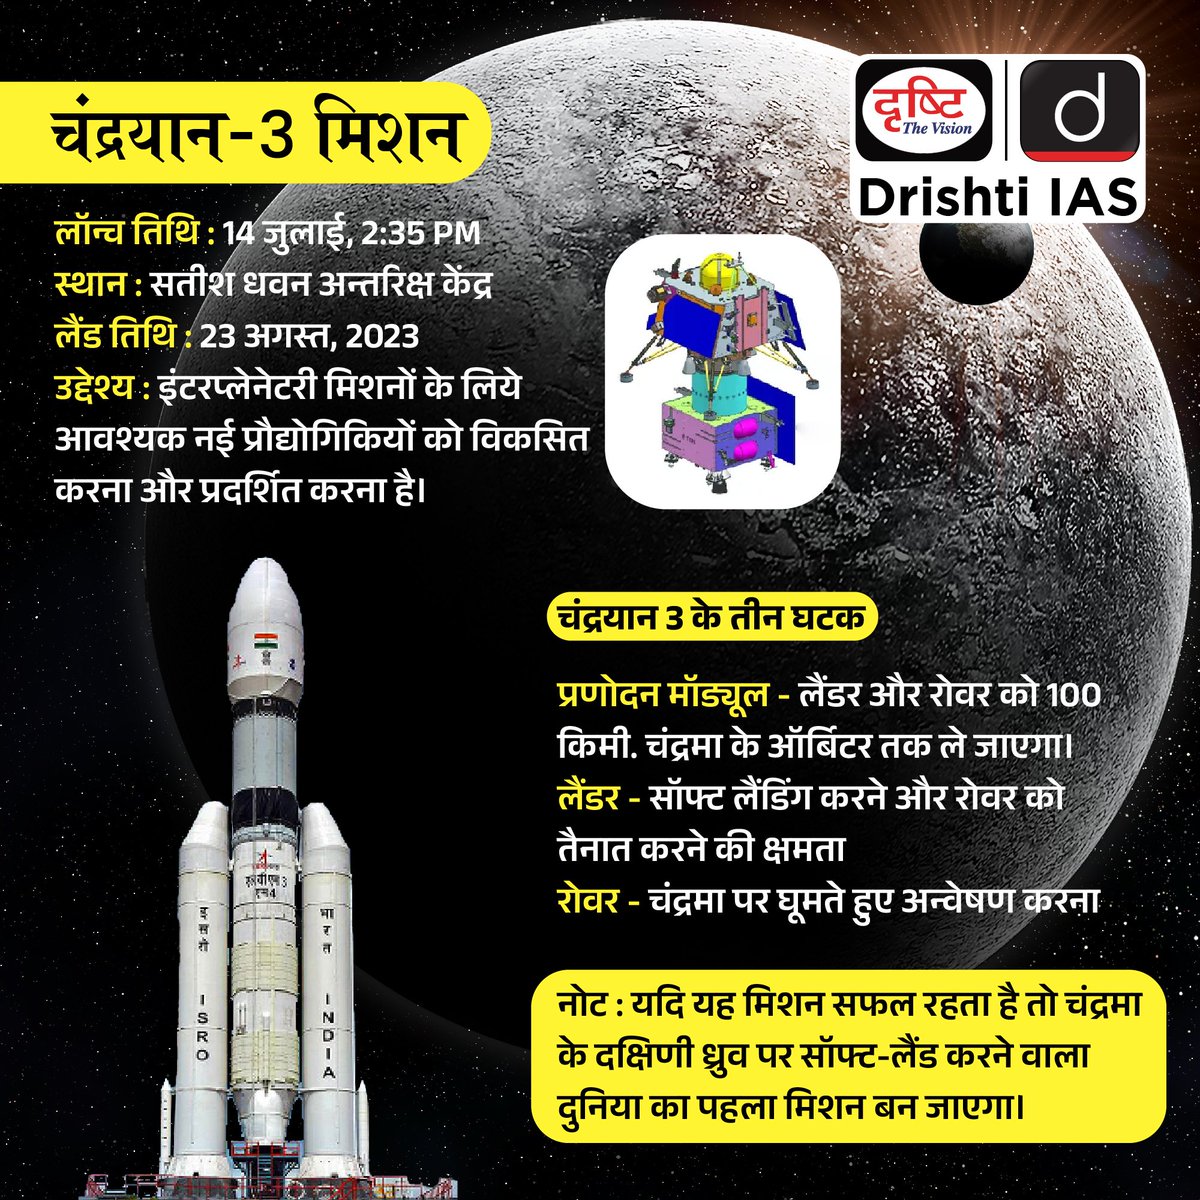 चंद्रयान-3
.
#Chandrayaan3 #isro #space #LVM3 #India #Moon #LunarMissions #technology #lunarlanding #lander #rover #payloads #Propulsion #Earth #Cryogenic #Rocket #orbit #leo #spacecraft #success #winner #scientist #drishtiiasinfographics #drishtiias #drishtipcs